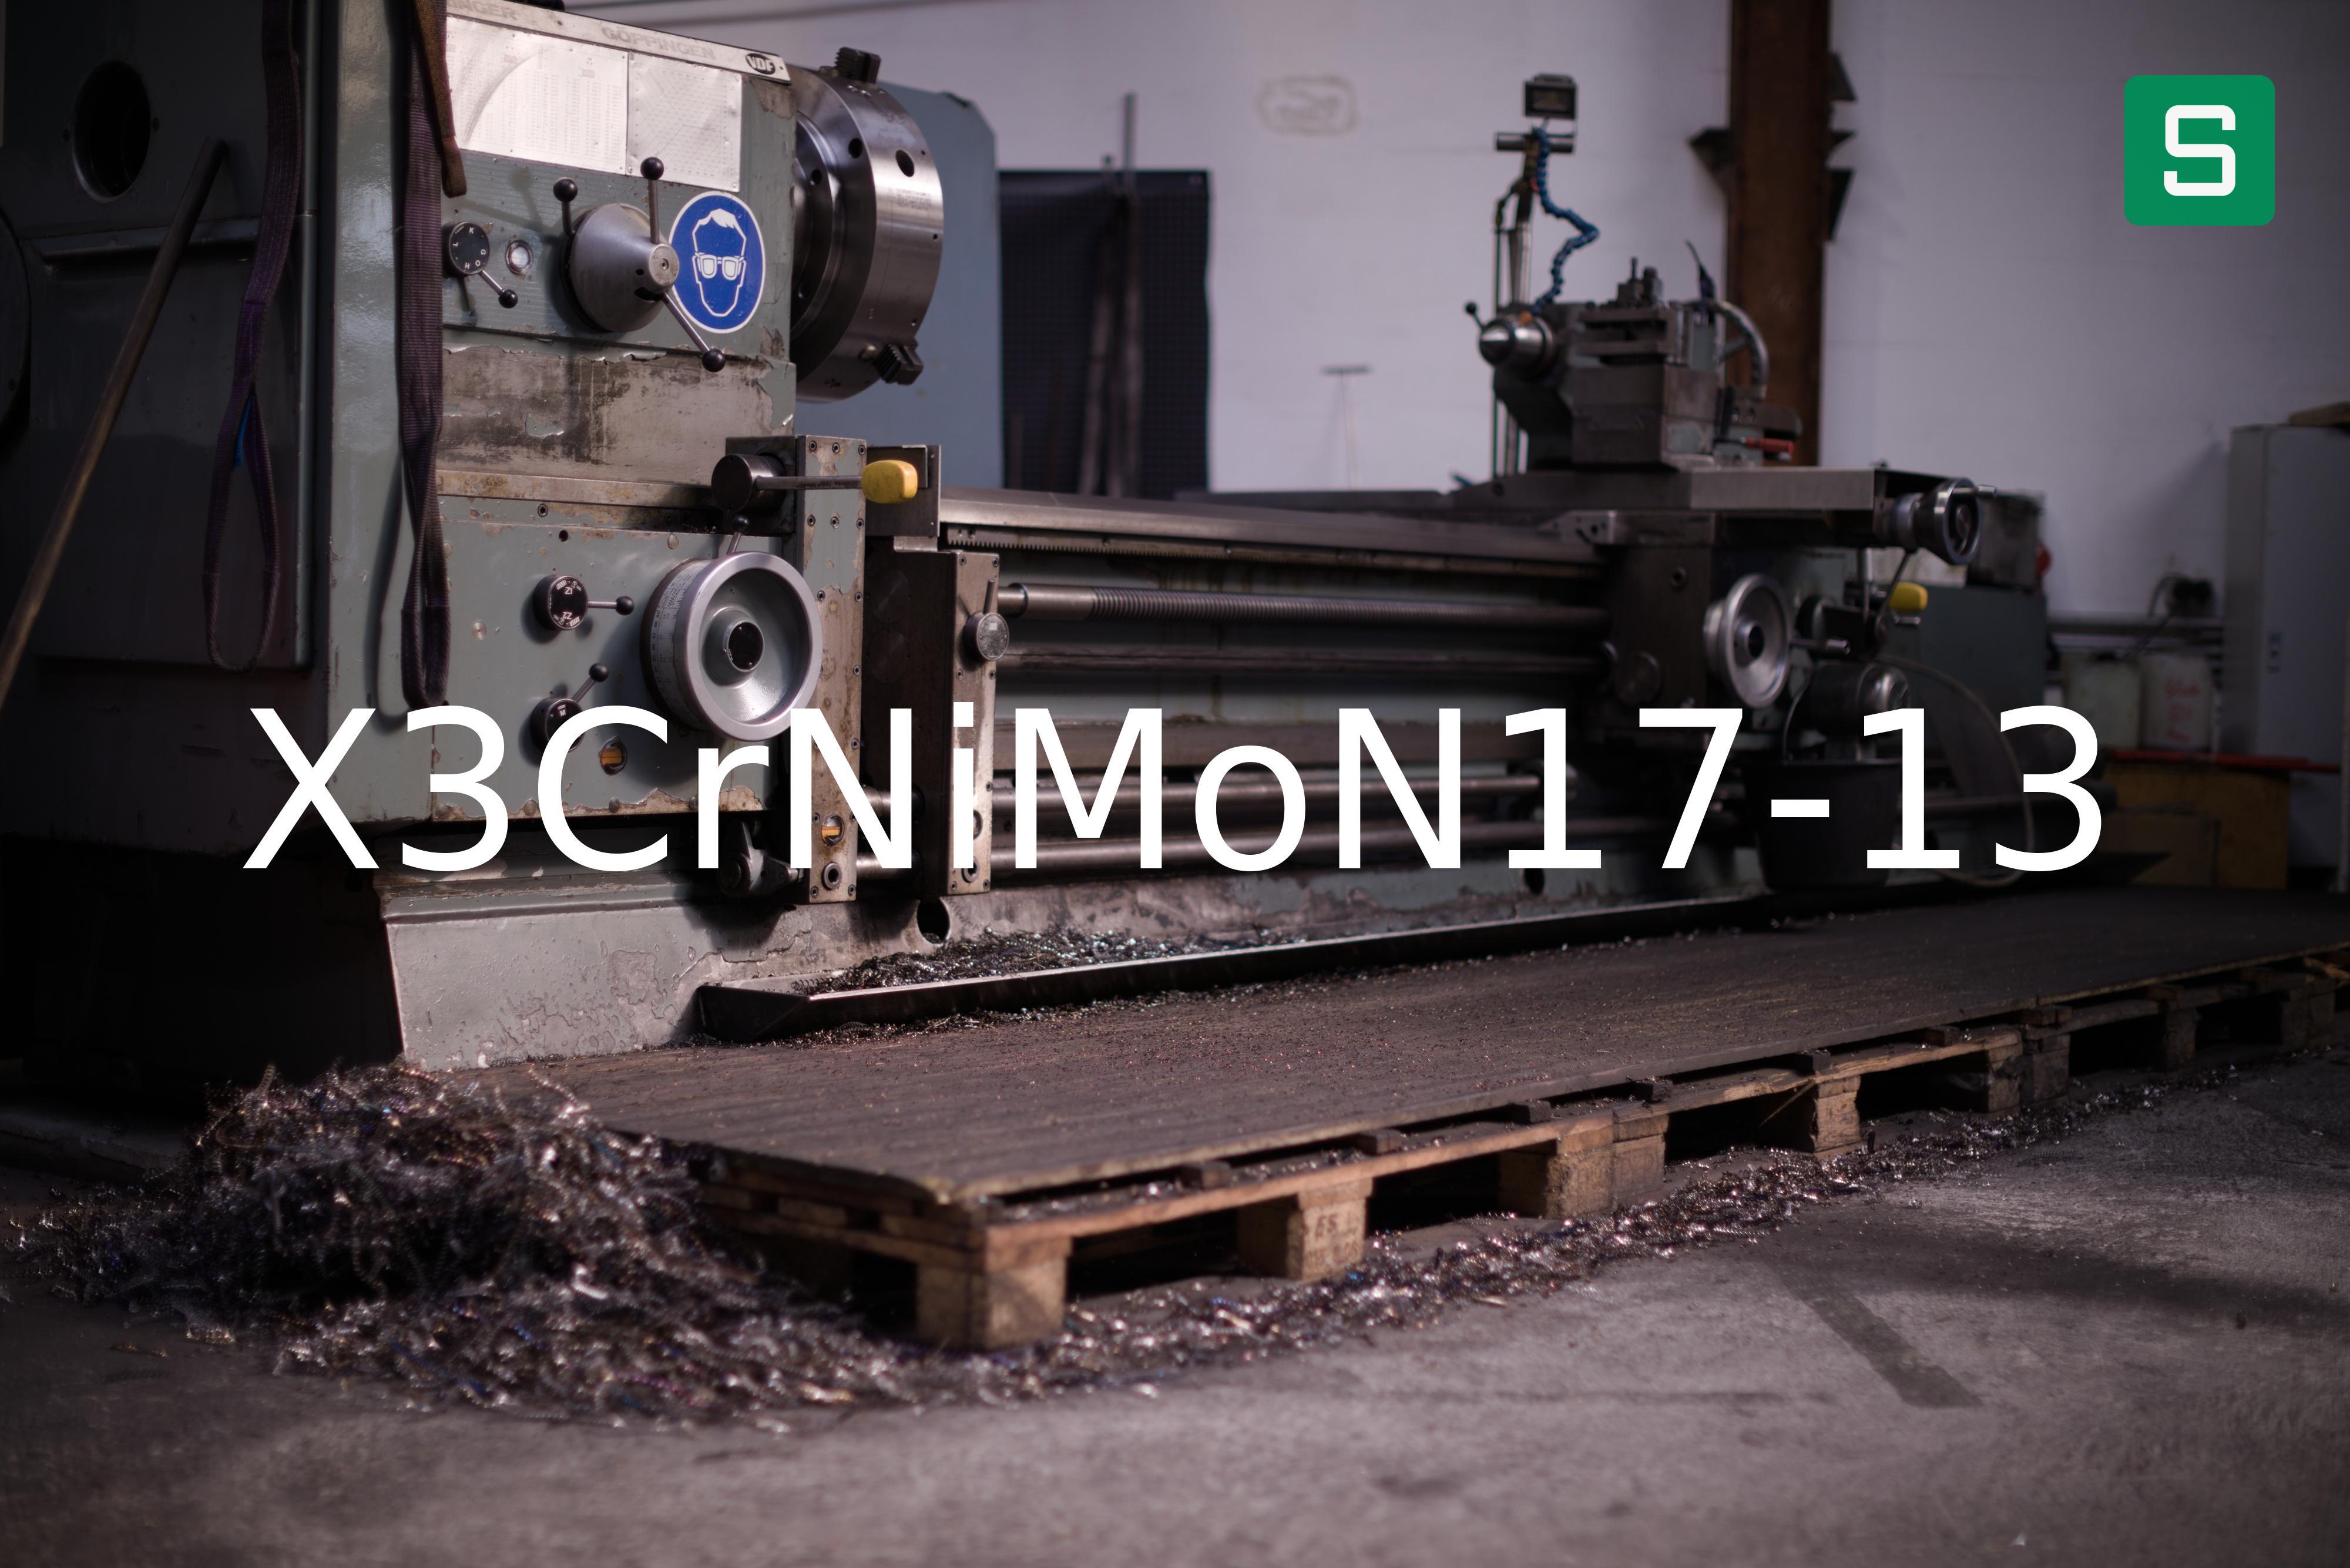 Steel Material: X3CrNiMoN17-13